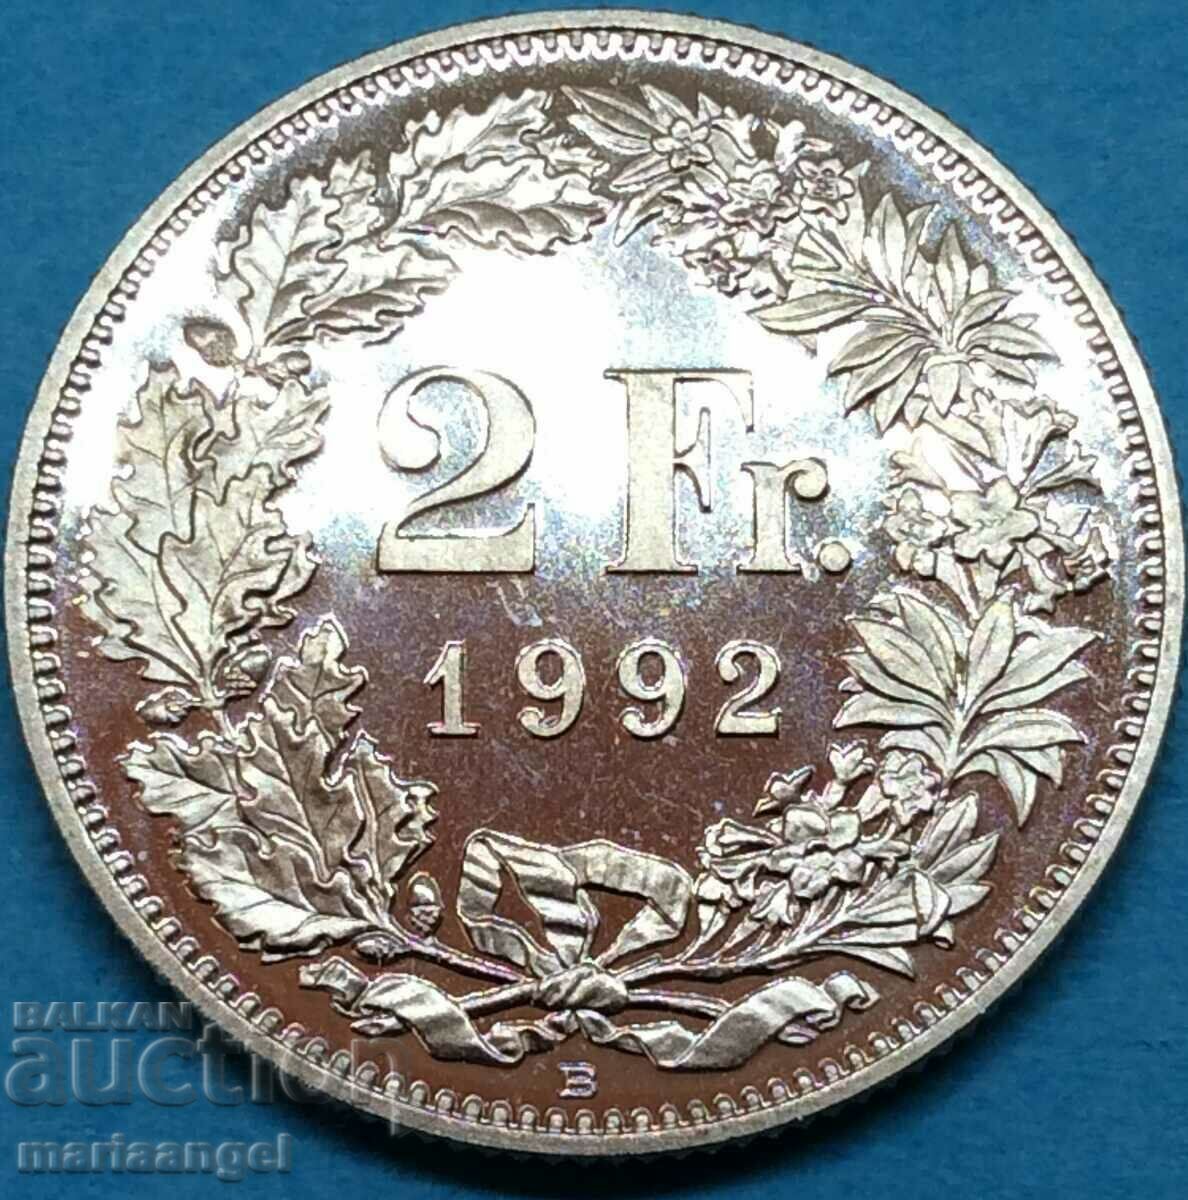 Switzerland 2 francs 1992 Helvetia UNC PROOF - rare